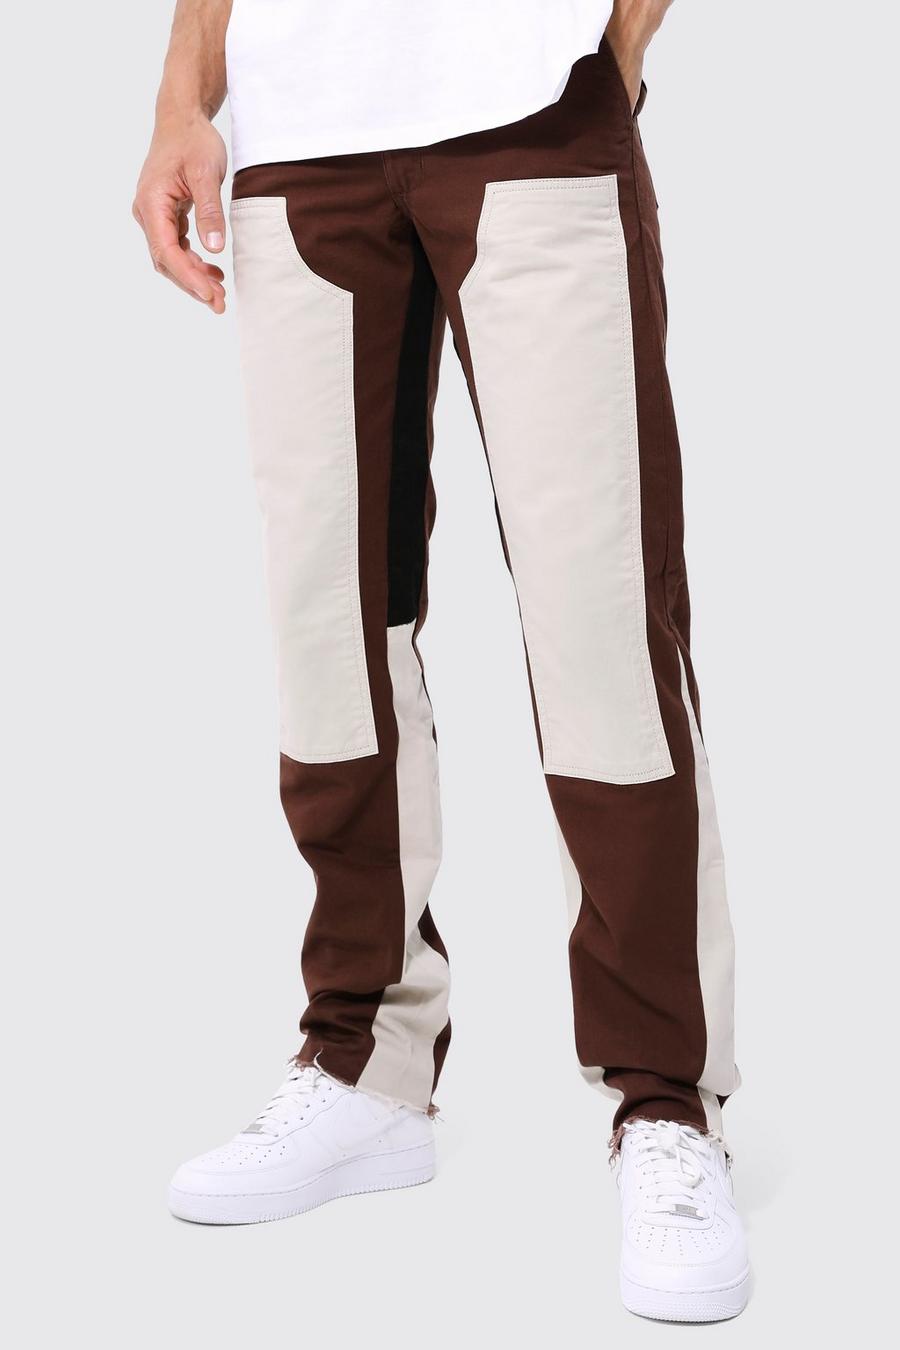 Tall - Pantalon charpentier droit, Chocolate marron